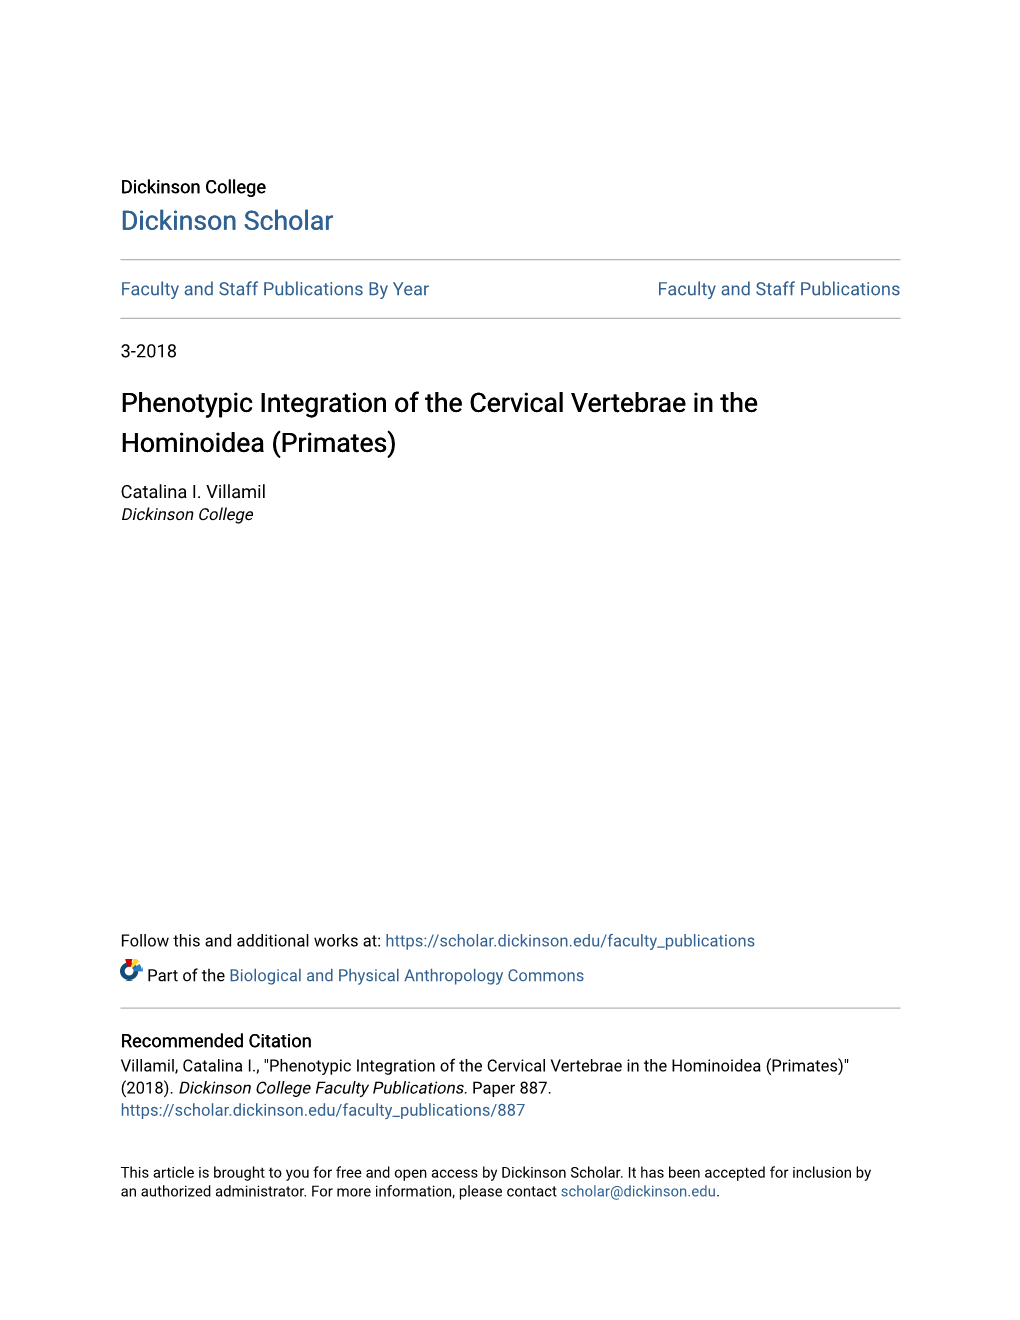 Phenotypic Integration of the Cervical Vertebrae in the Hominoidea (Primates)